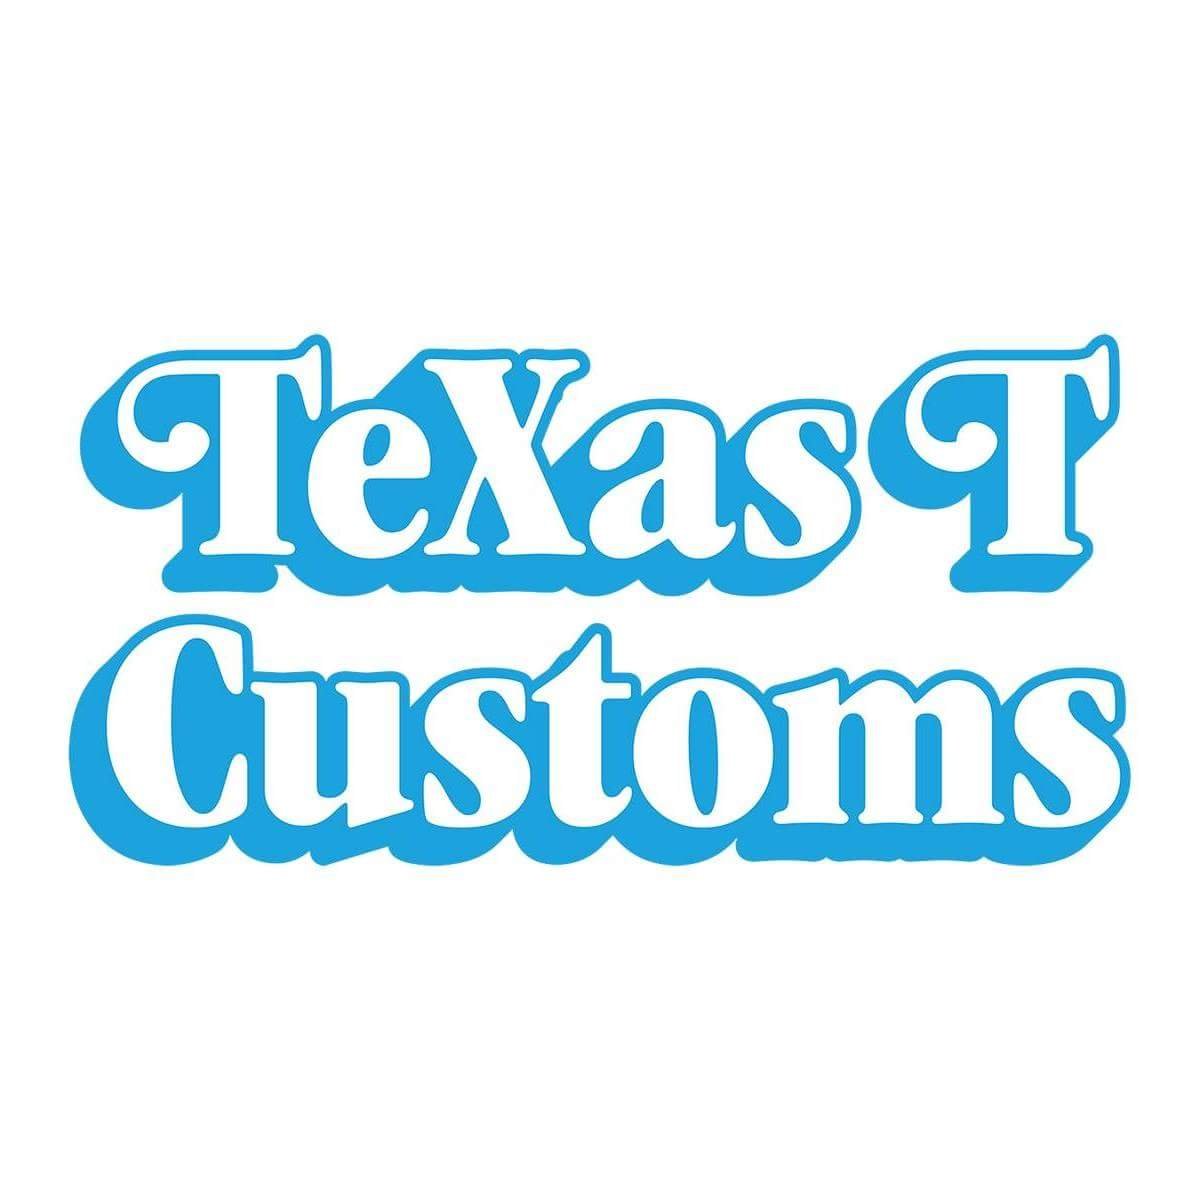 TeXas T Customs